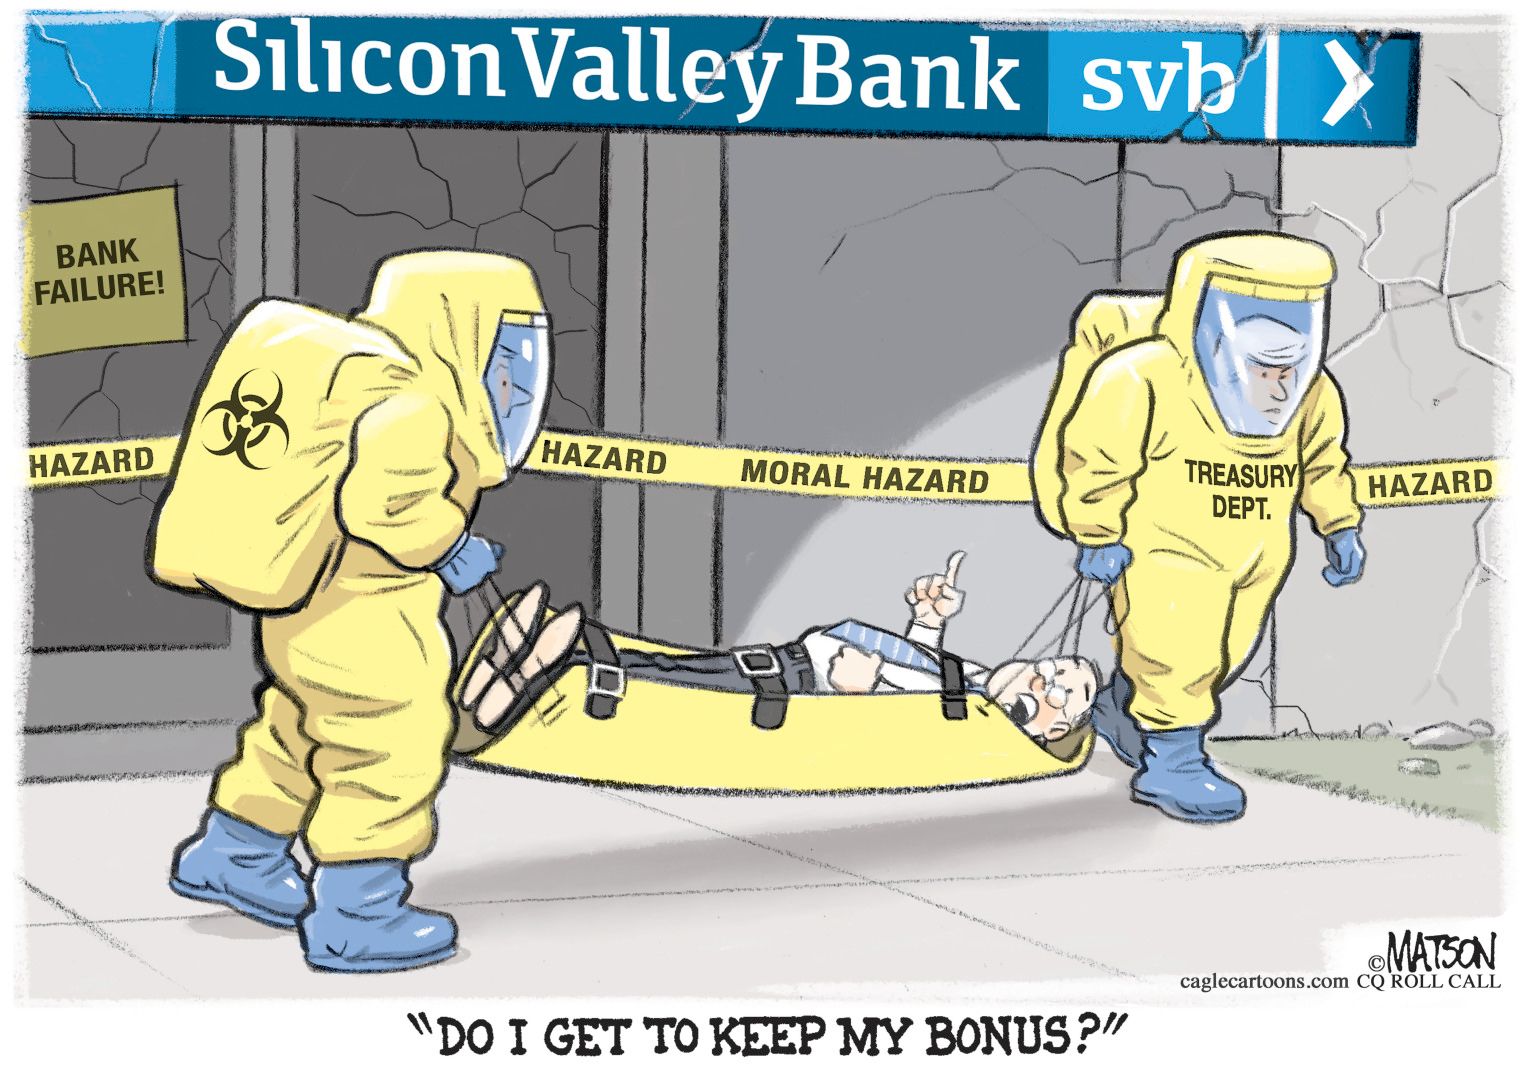 newsjustin.press - Silicon Valley Bank Failure